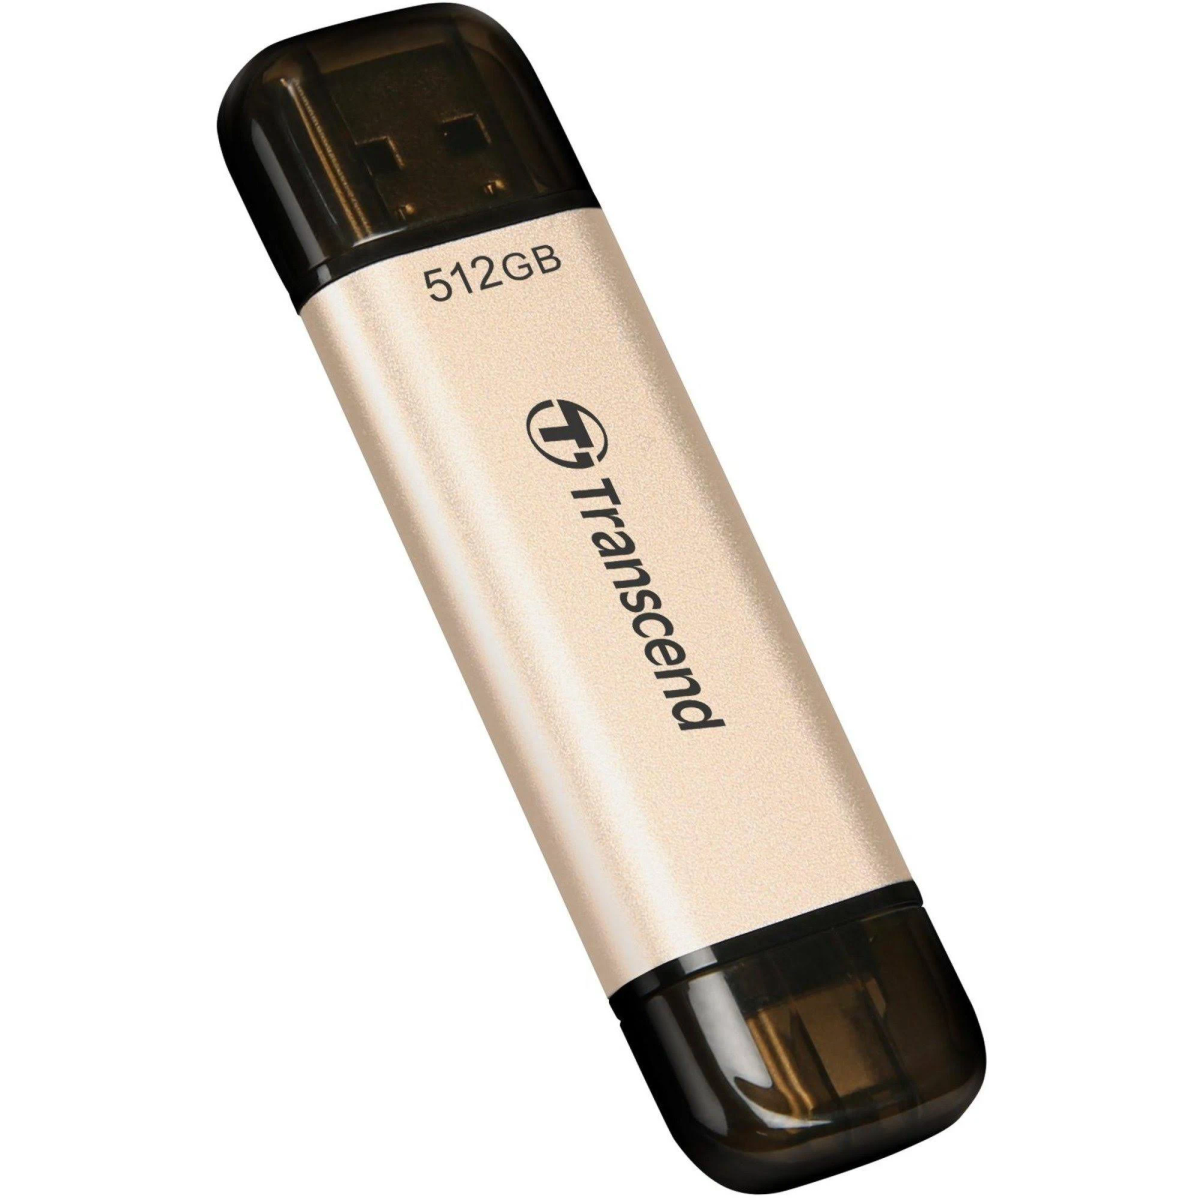 TS512GJF930C (Schwarz, TRANSCEND 512 GB) USB-Flash-Laufwerk